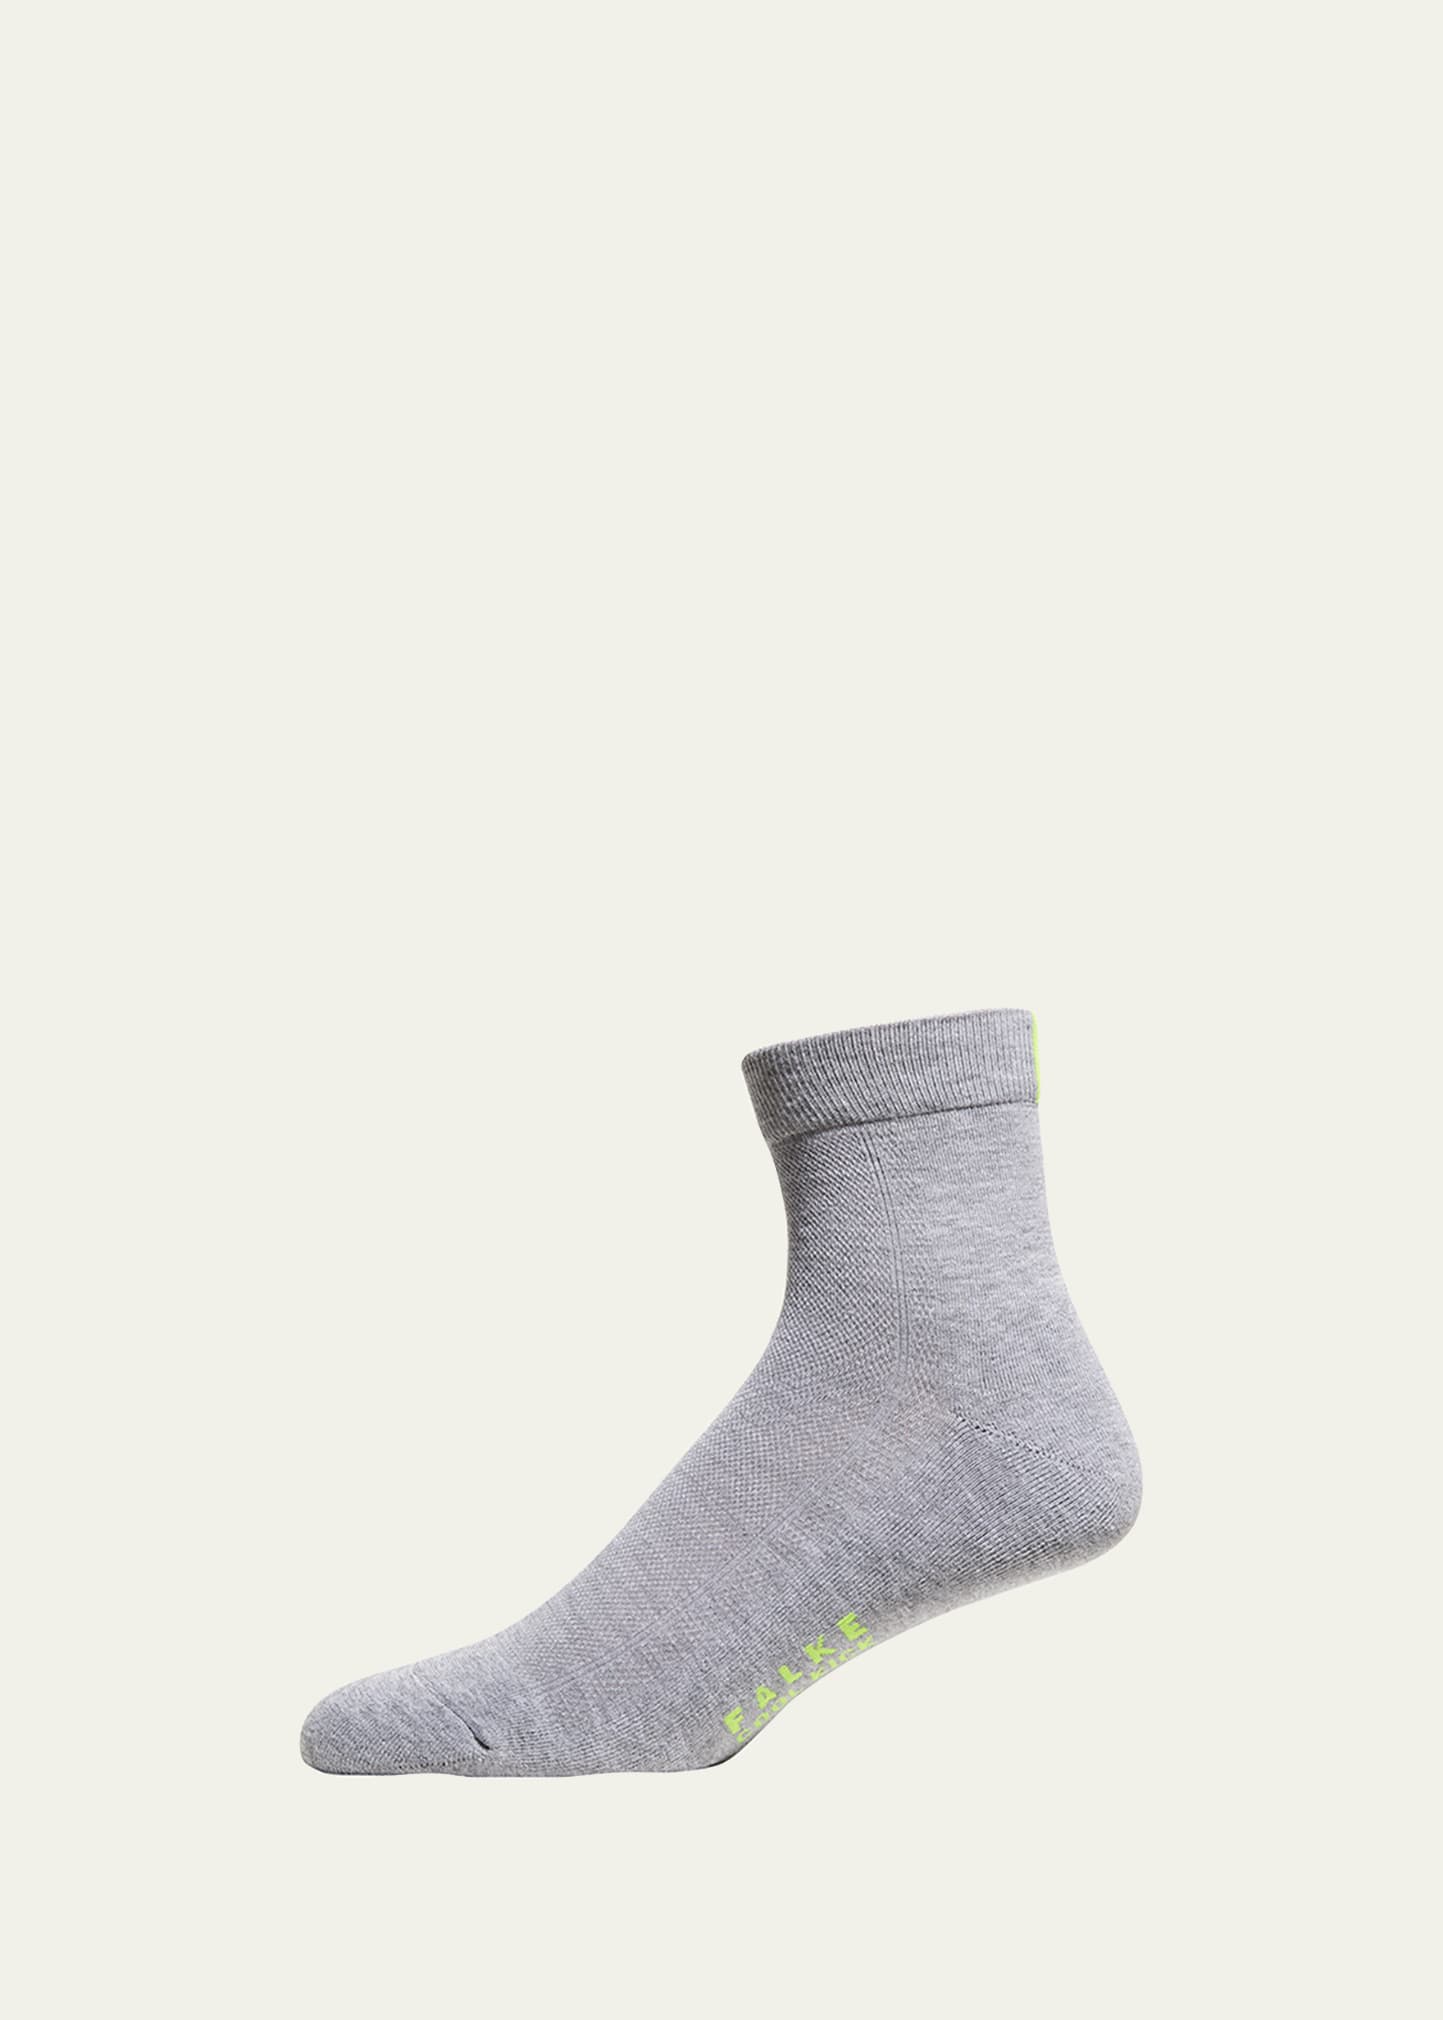 Falke Men's Cool Kick Short Socks In Light Grey